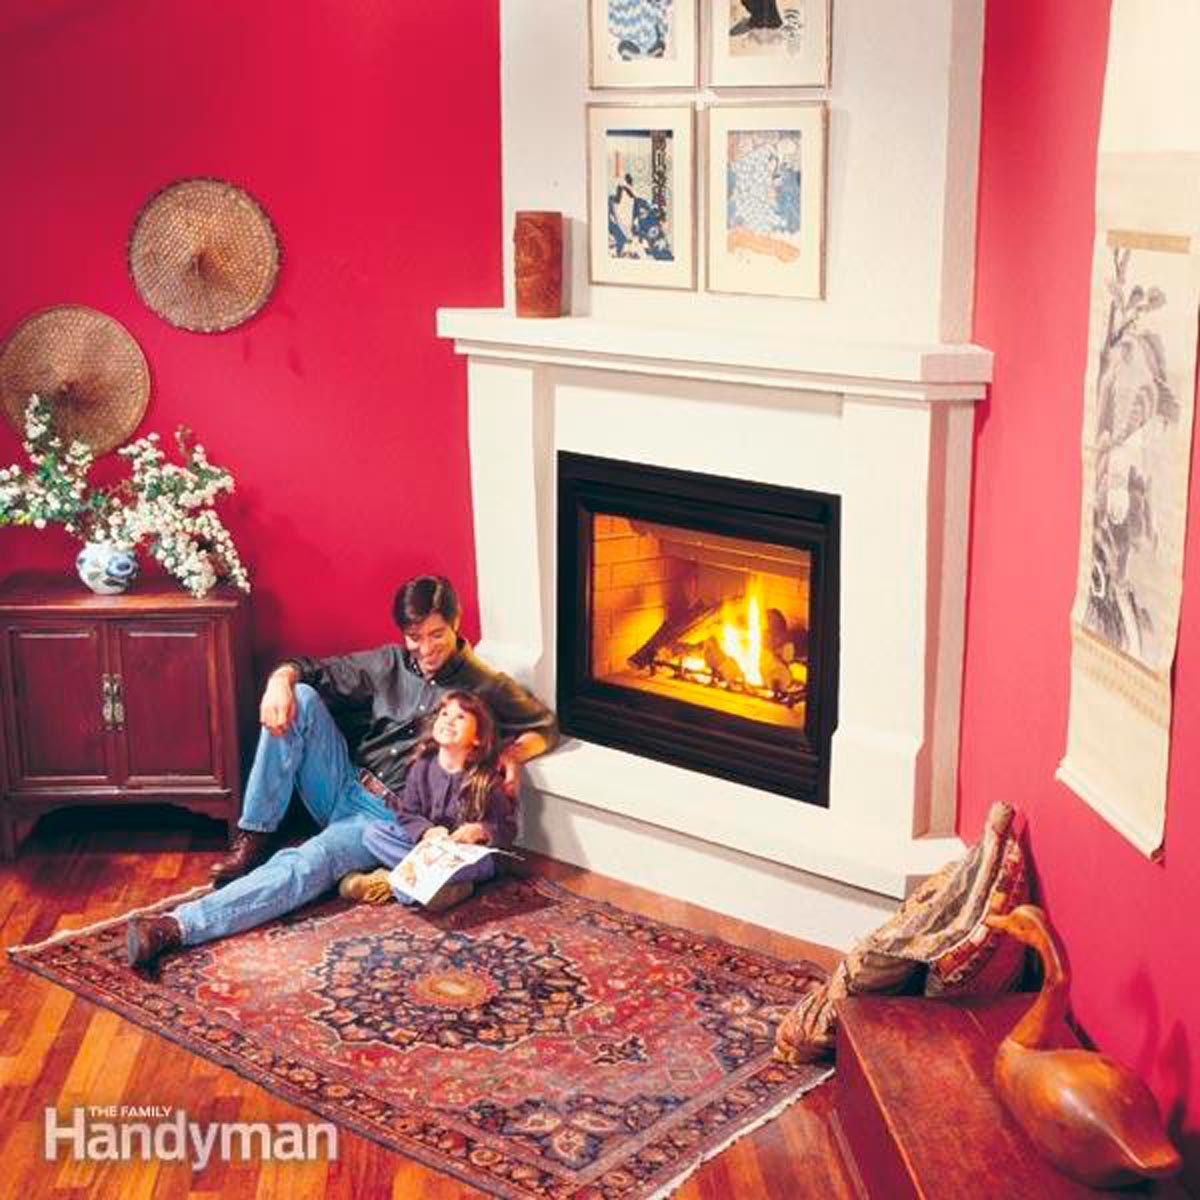 Building a Fireplace - Heat Accumulation & Insulation